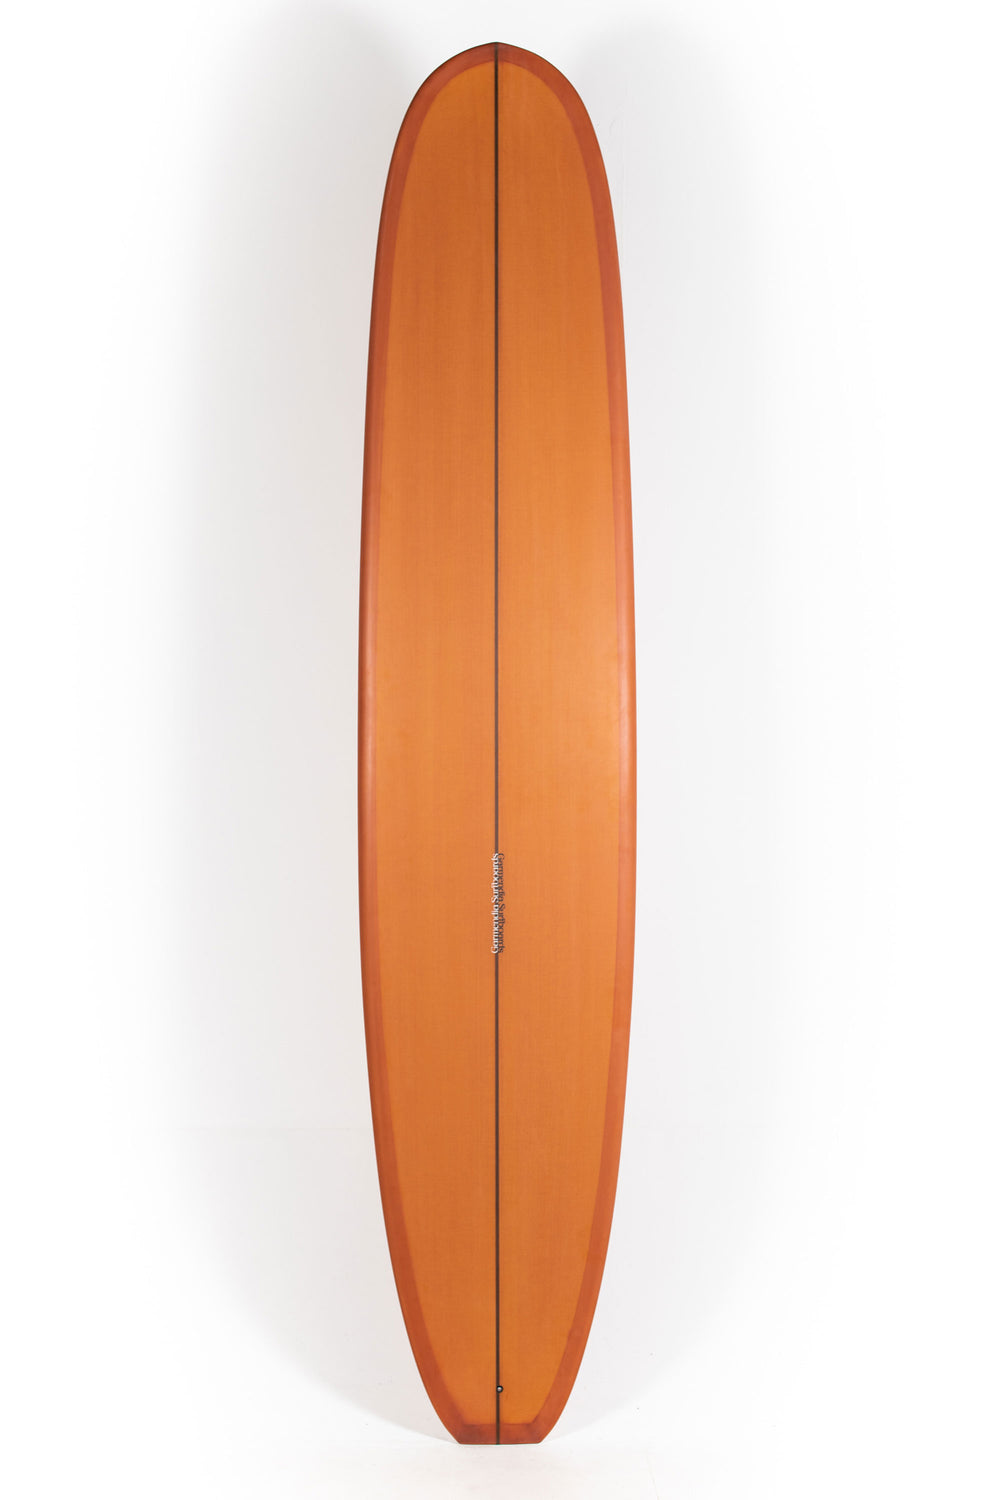 Pukas Surf Shop - Garmendia Surfboards - NOSERIDER - 9'6